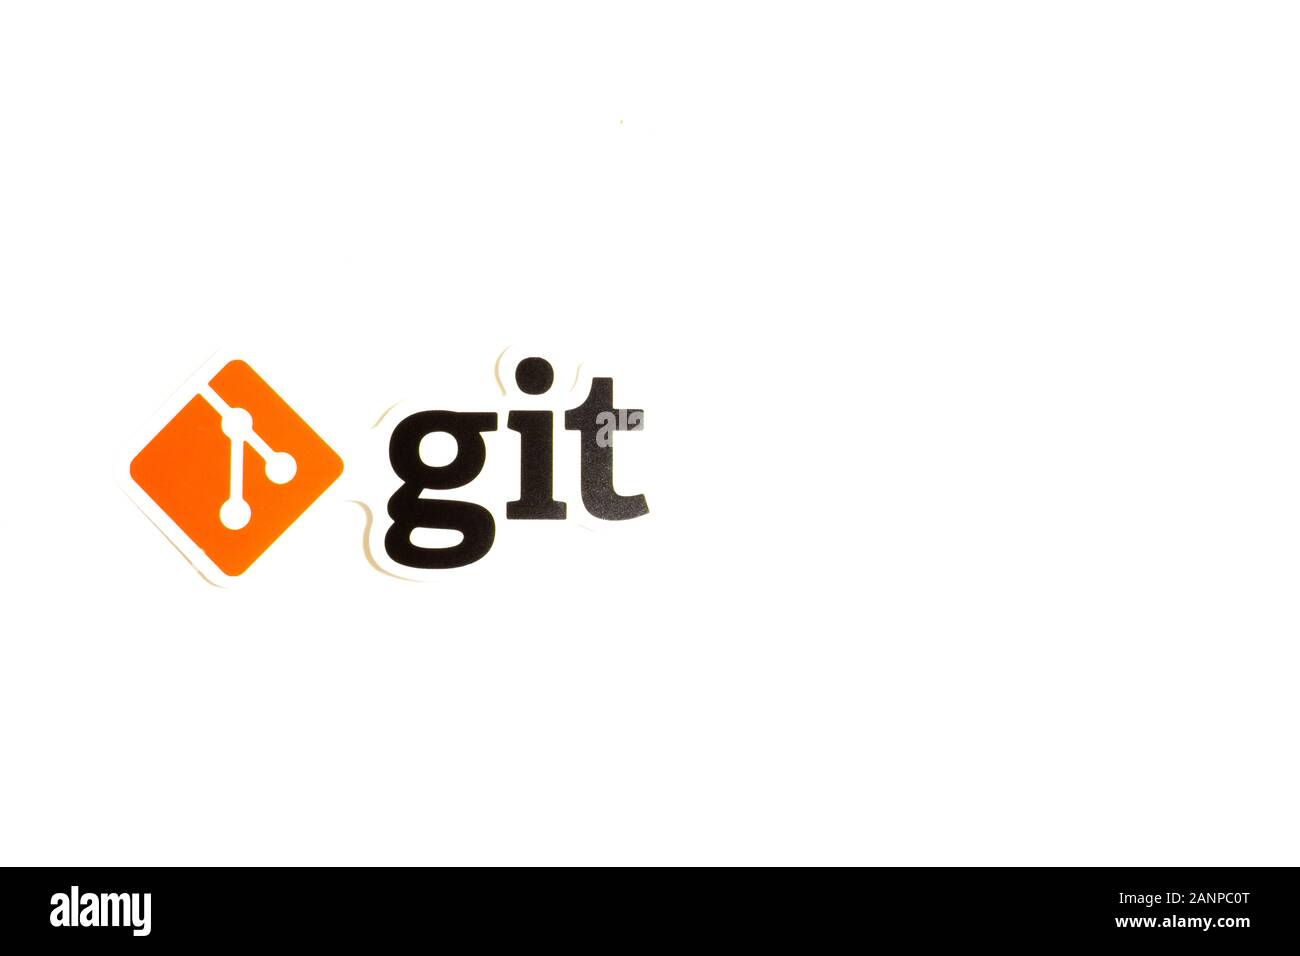 Los Angeles, California, USA - 17 January 2020: git logo with copy space, Illustrative Editorial Stock Photo